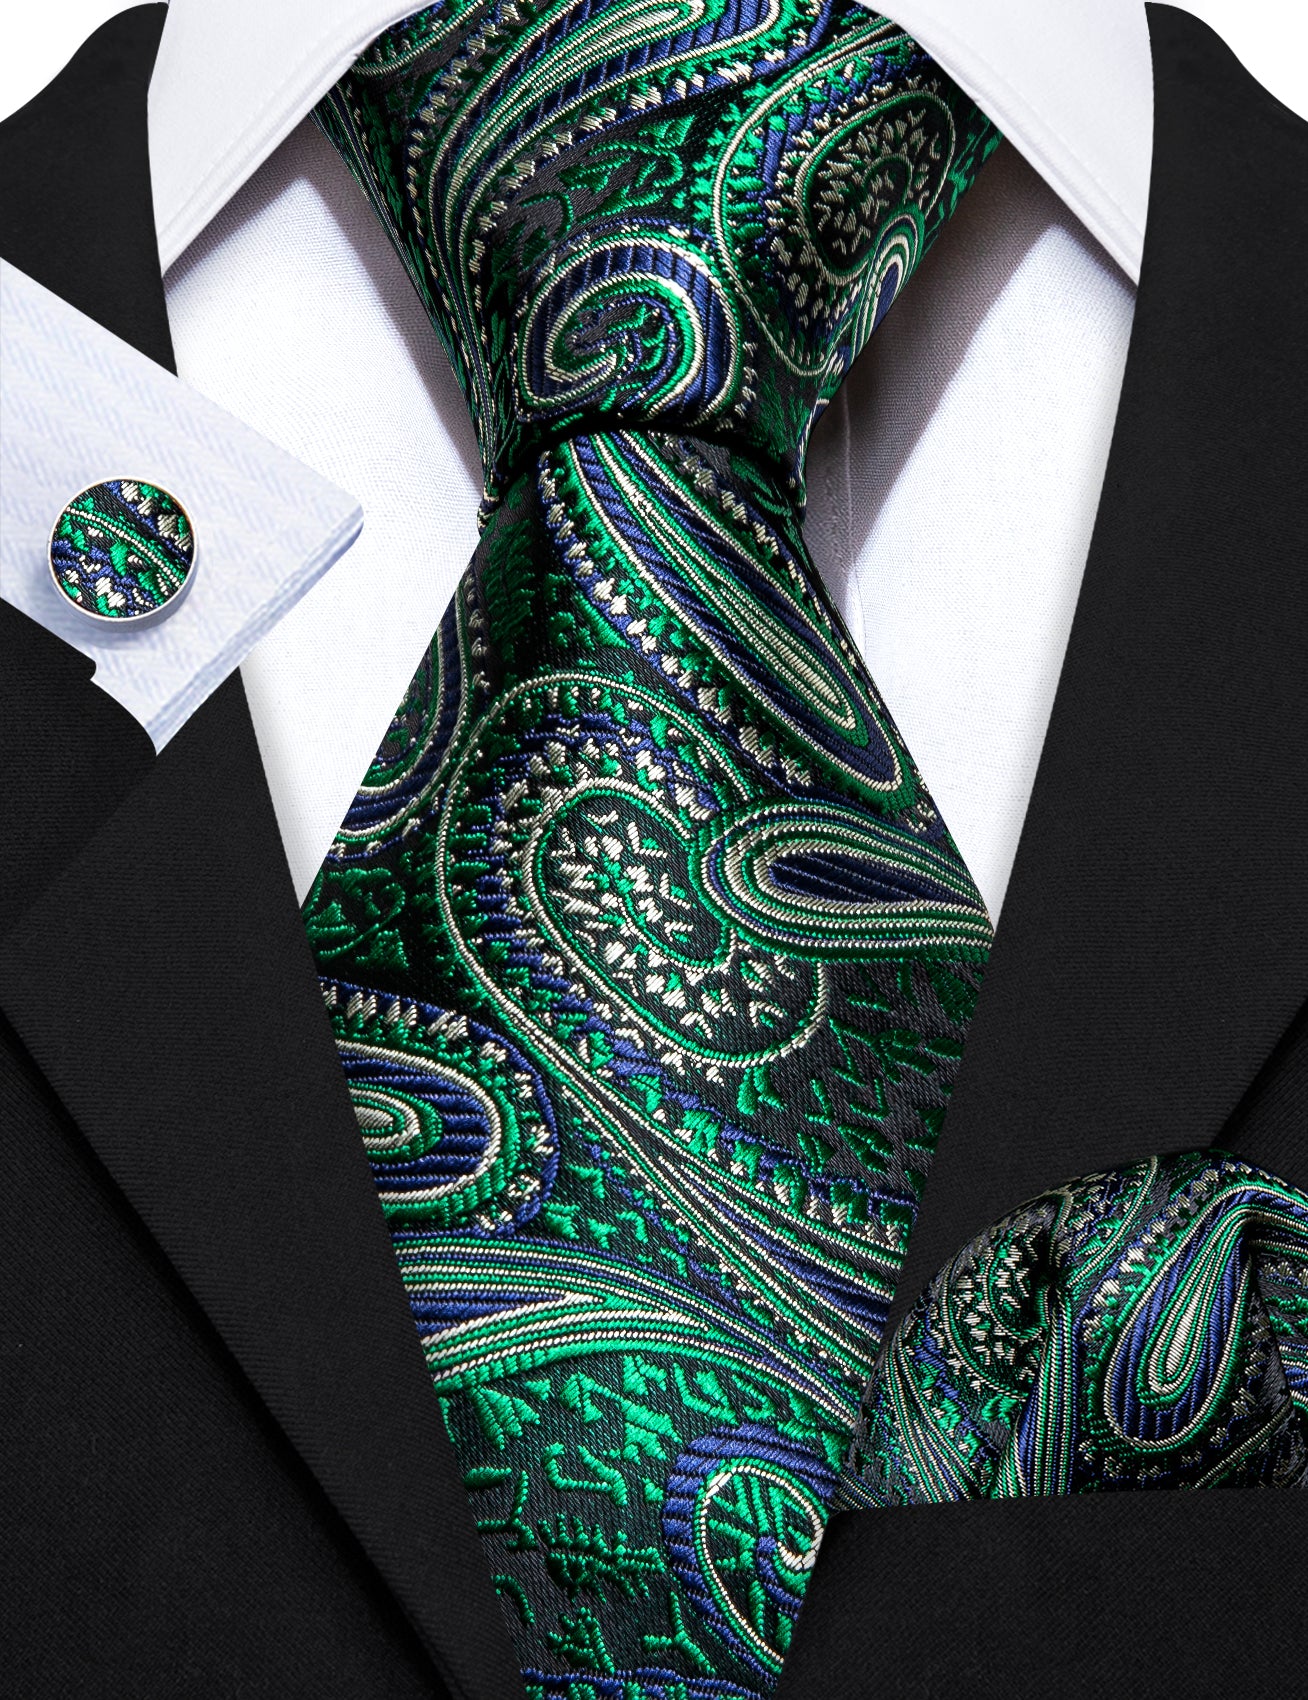 Barry.wang Green Tie Jacquard Paisley Silk Tie Hanky Cufflinks Set